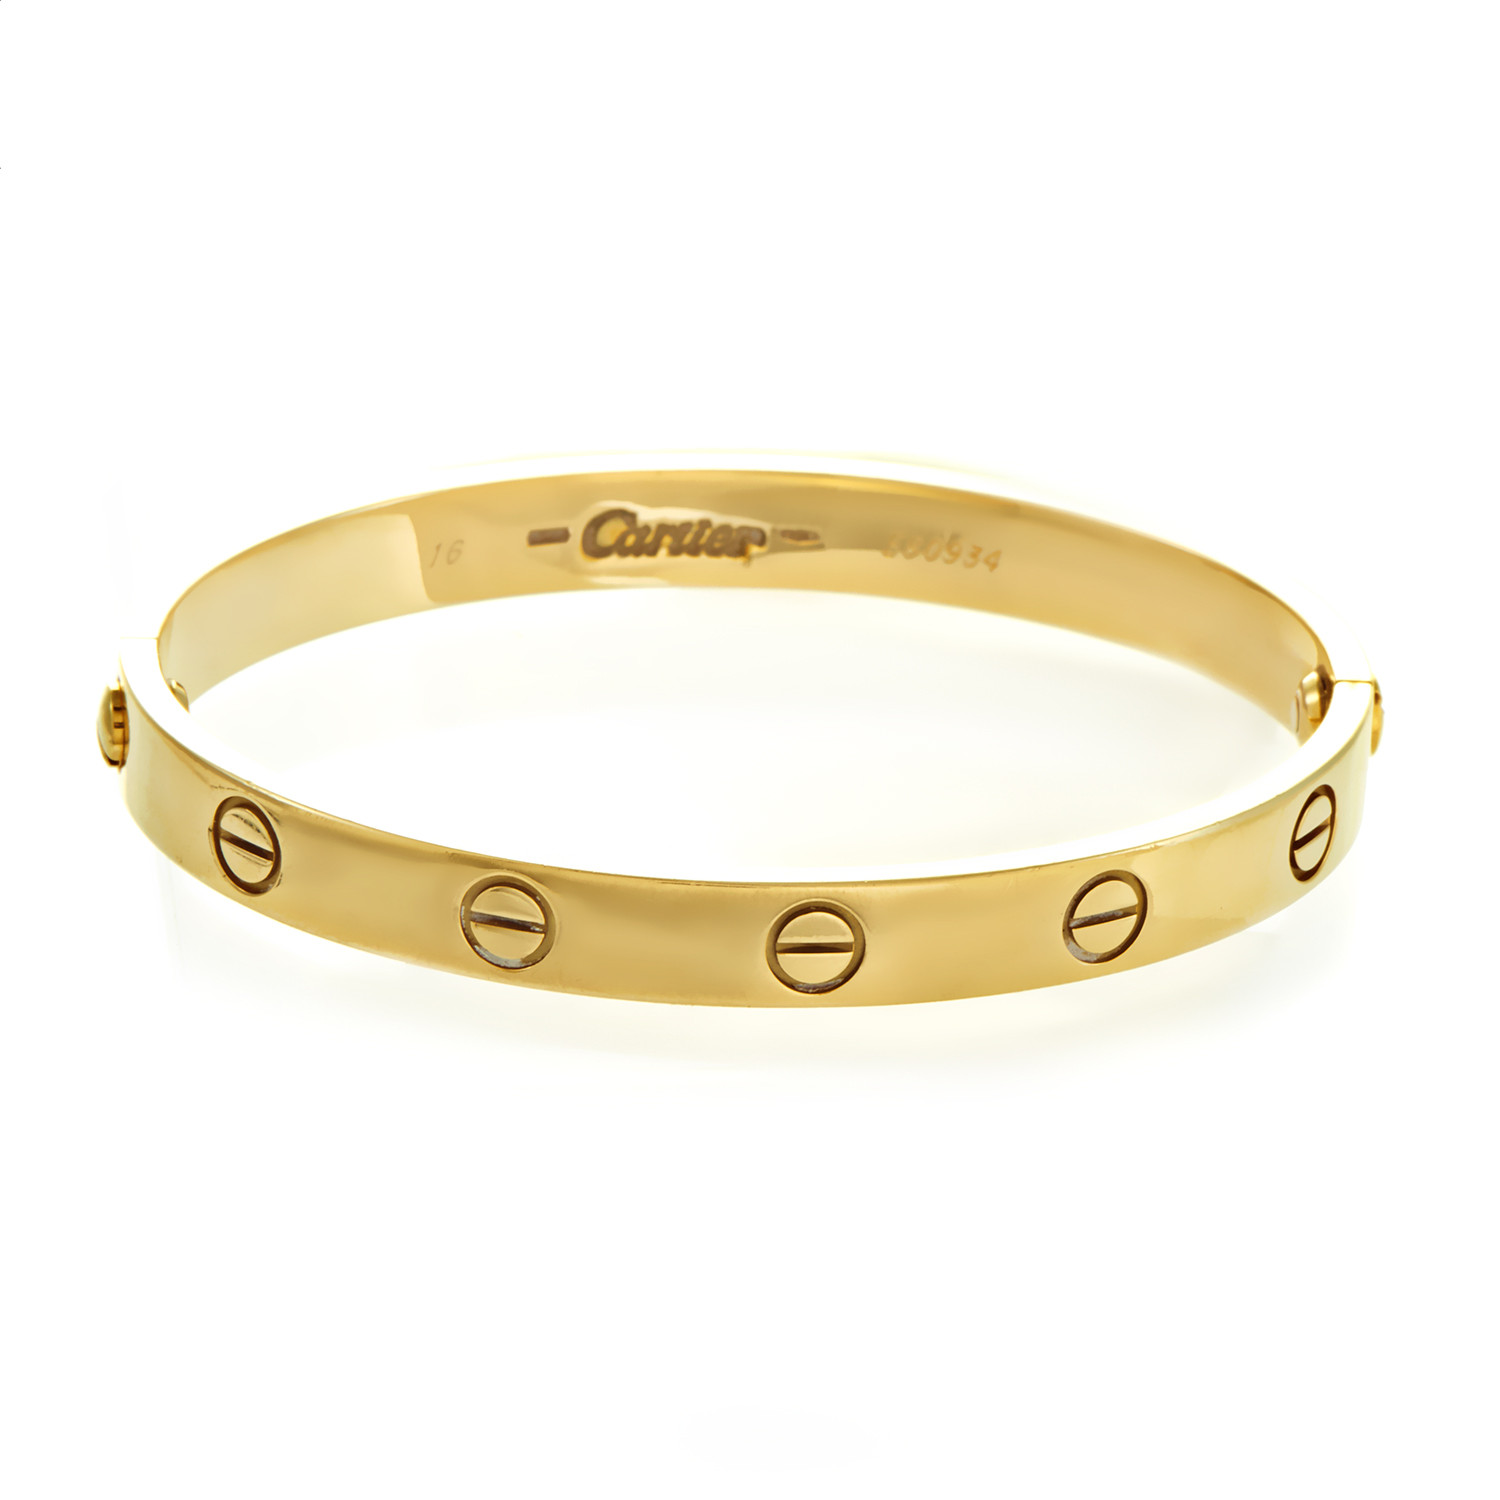 Gold Cartier Bracelet
 Cartier LOVE Women s 18K Yellow Gold Bracelet Size 16